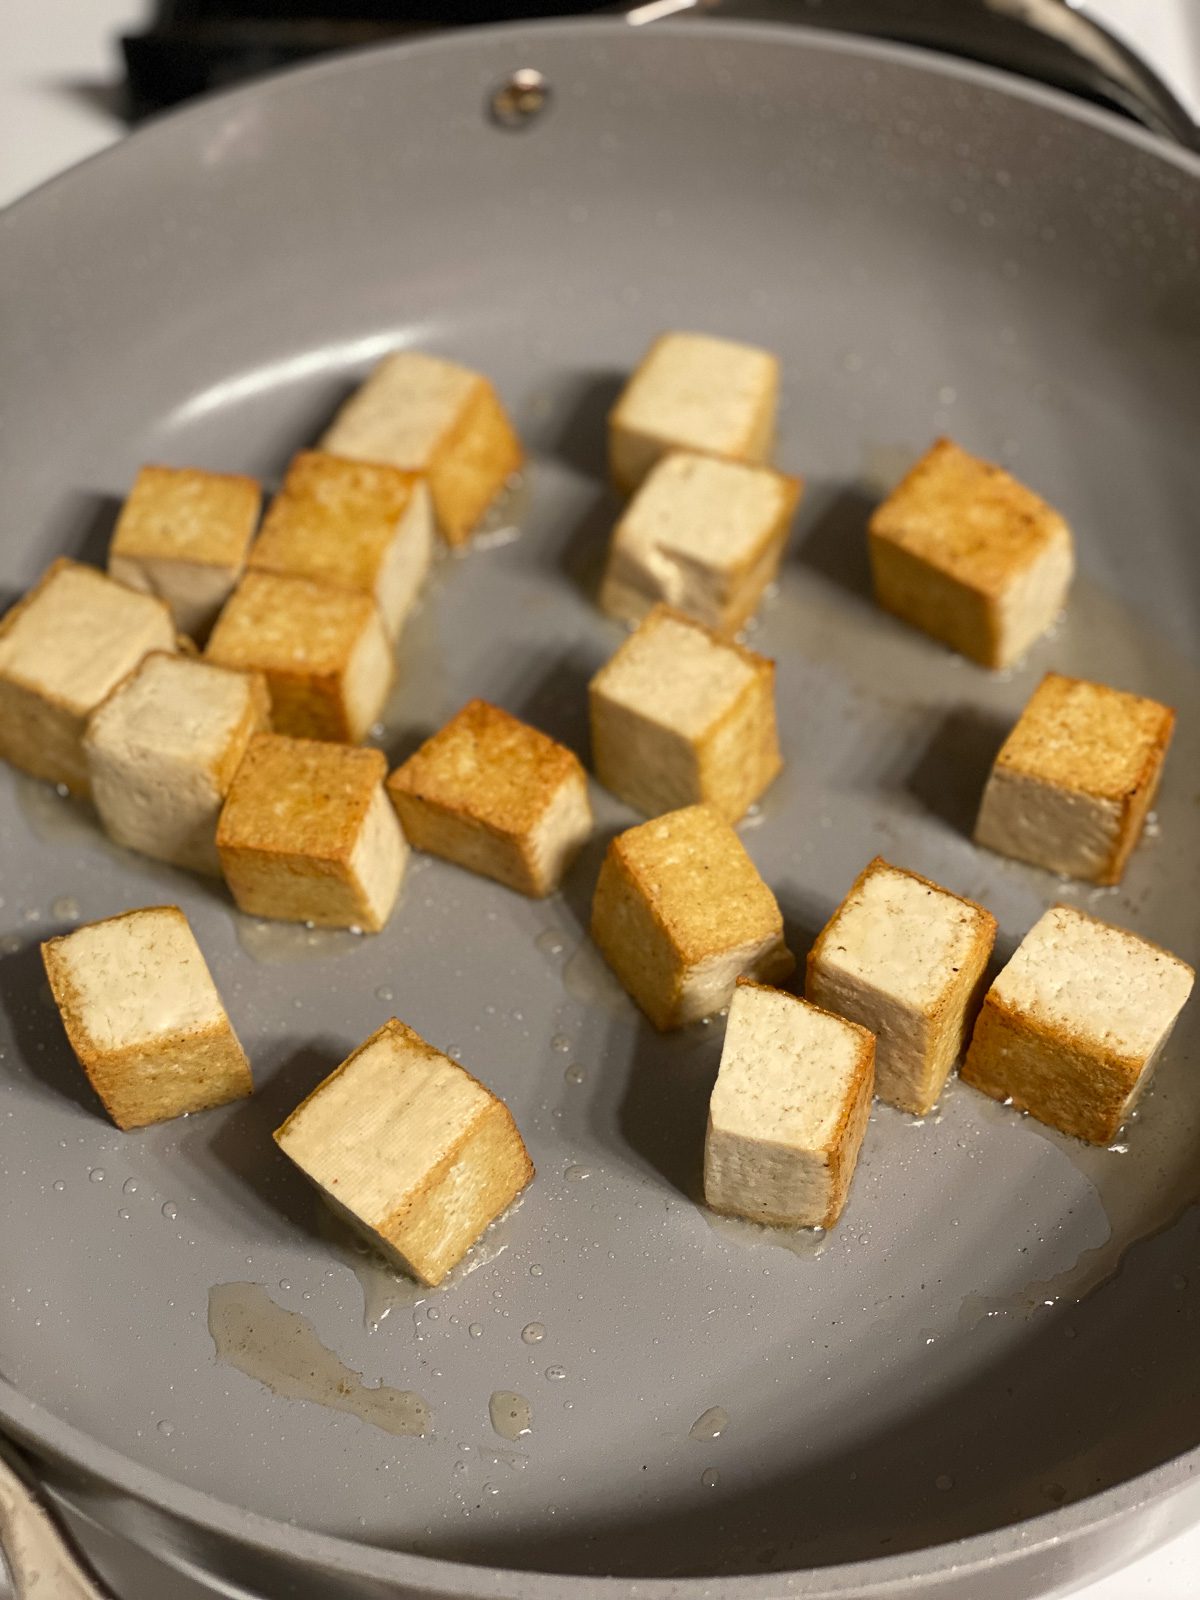 process of tofu cooking in pan